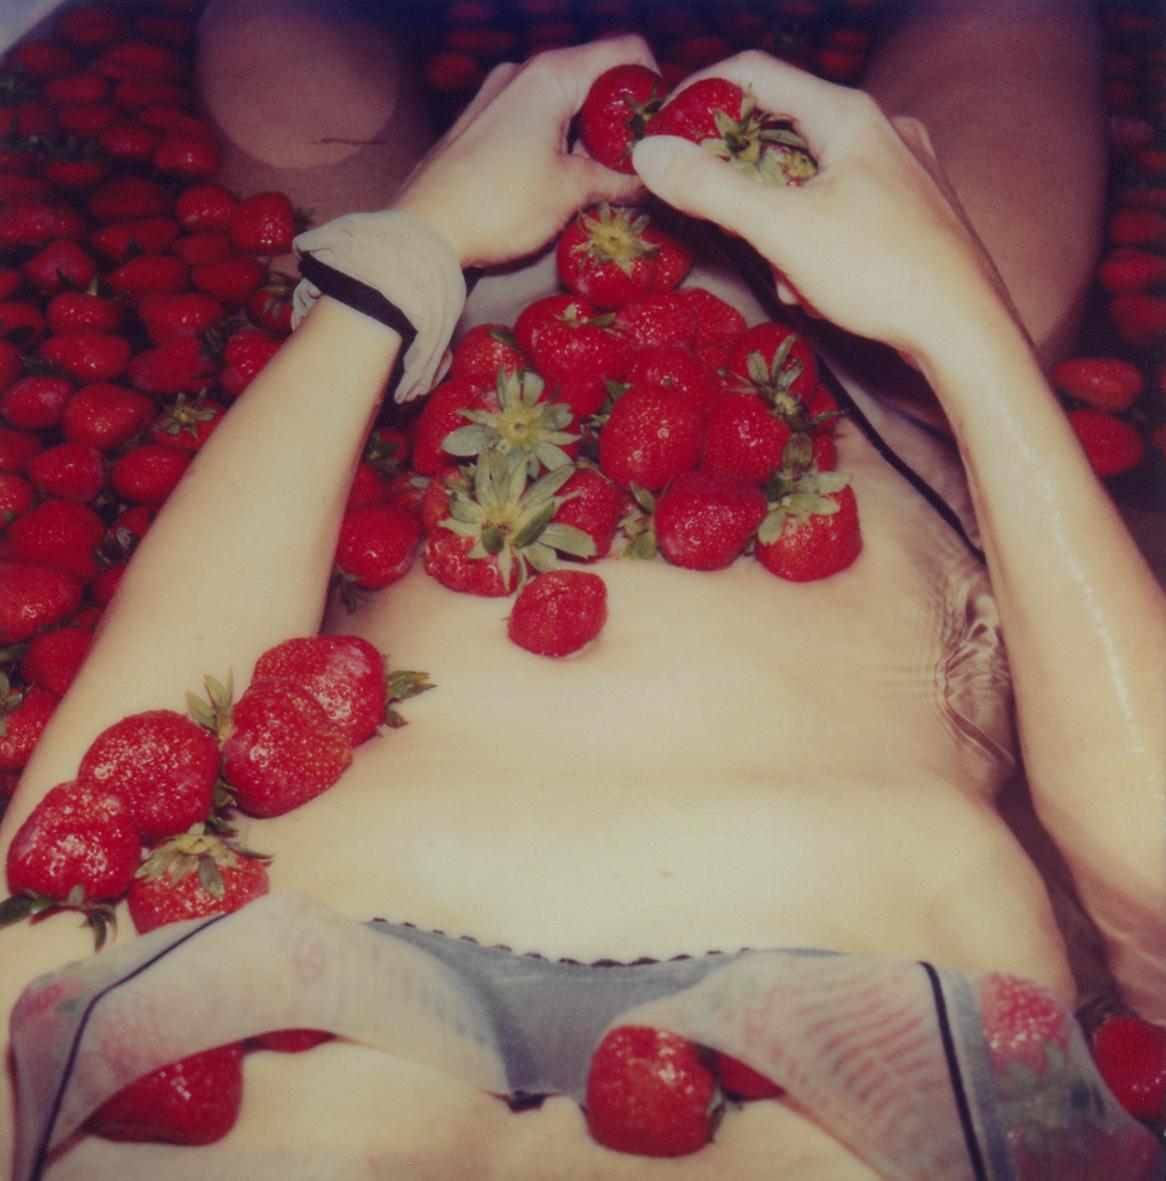 Carmen de Vos Figurative Photograph - Girls like Strawberries, for no reason at all #14 - 21st Century, Polaroid